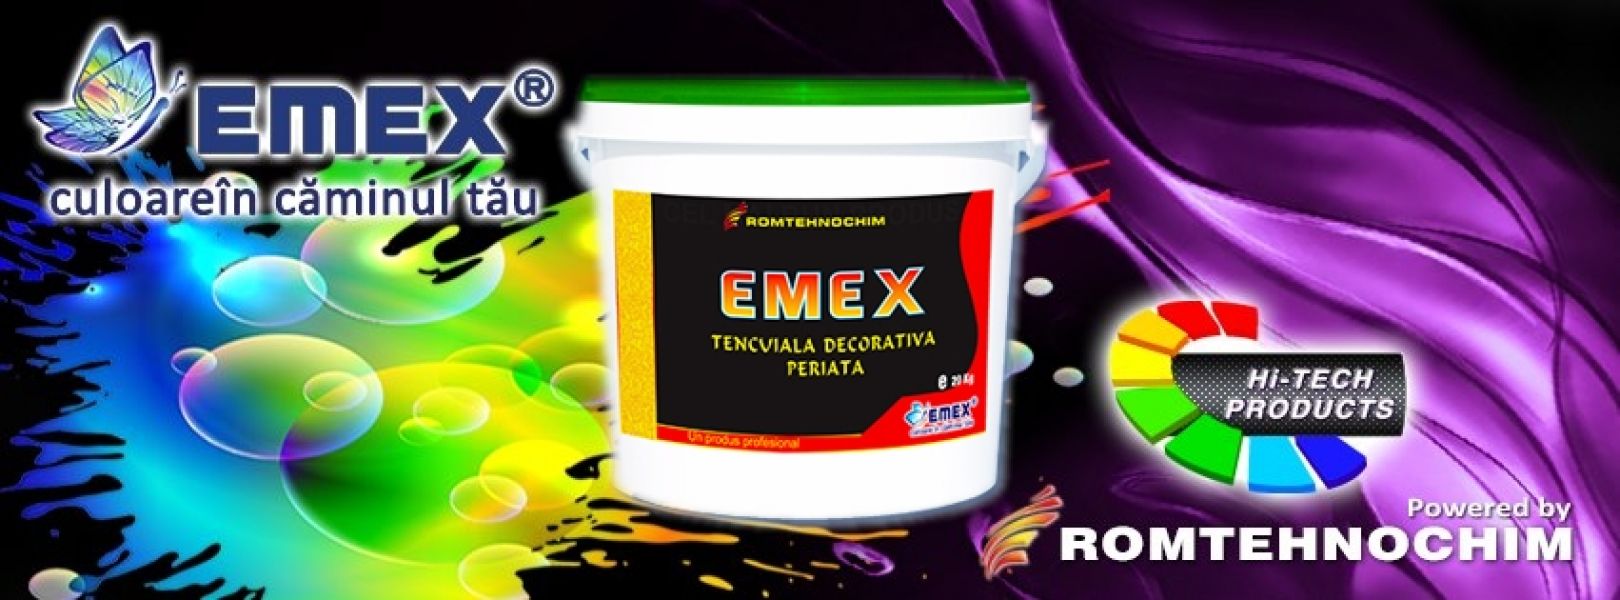 Tencuiala Decorativa Periata EMEX - 4,40 Ron/Kg – Alb